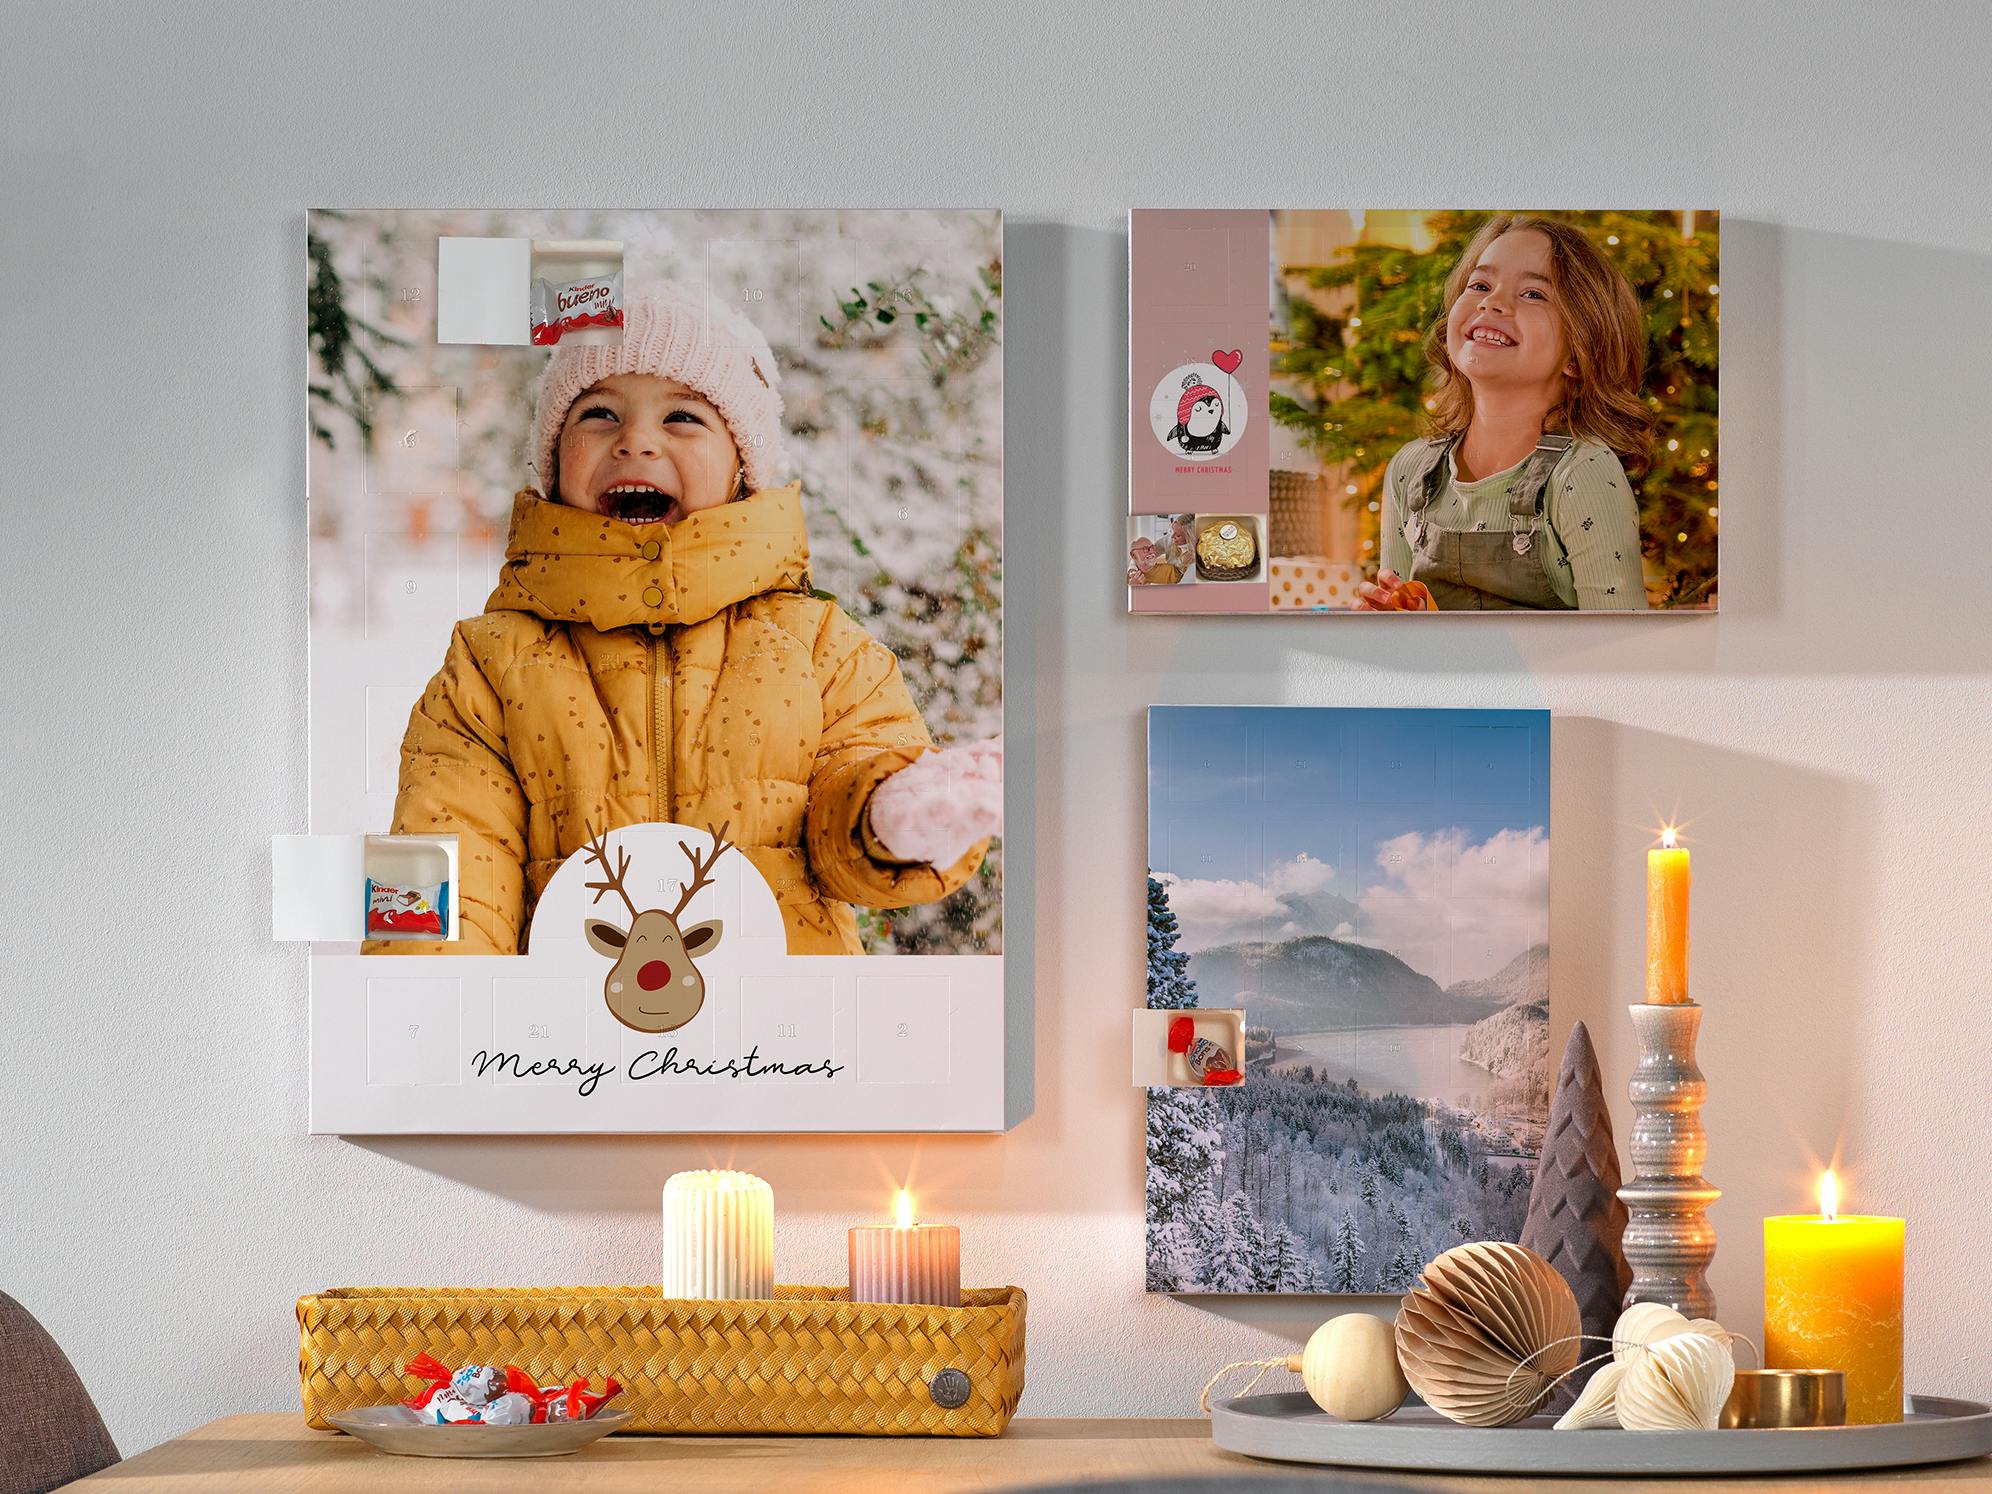 Foto Adventskalender met chocolade van Kinder en Ferrero pralines